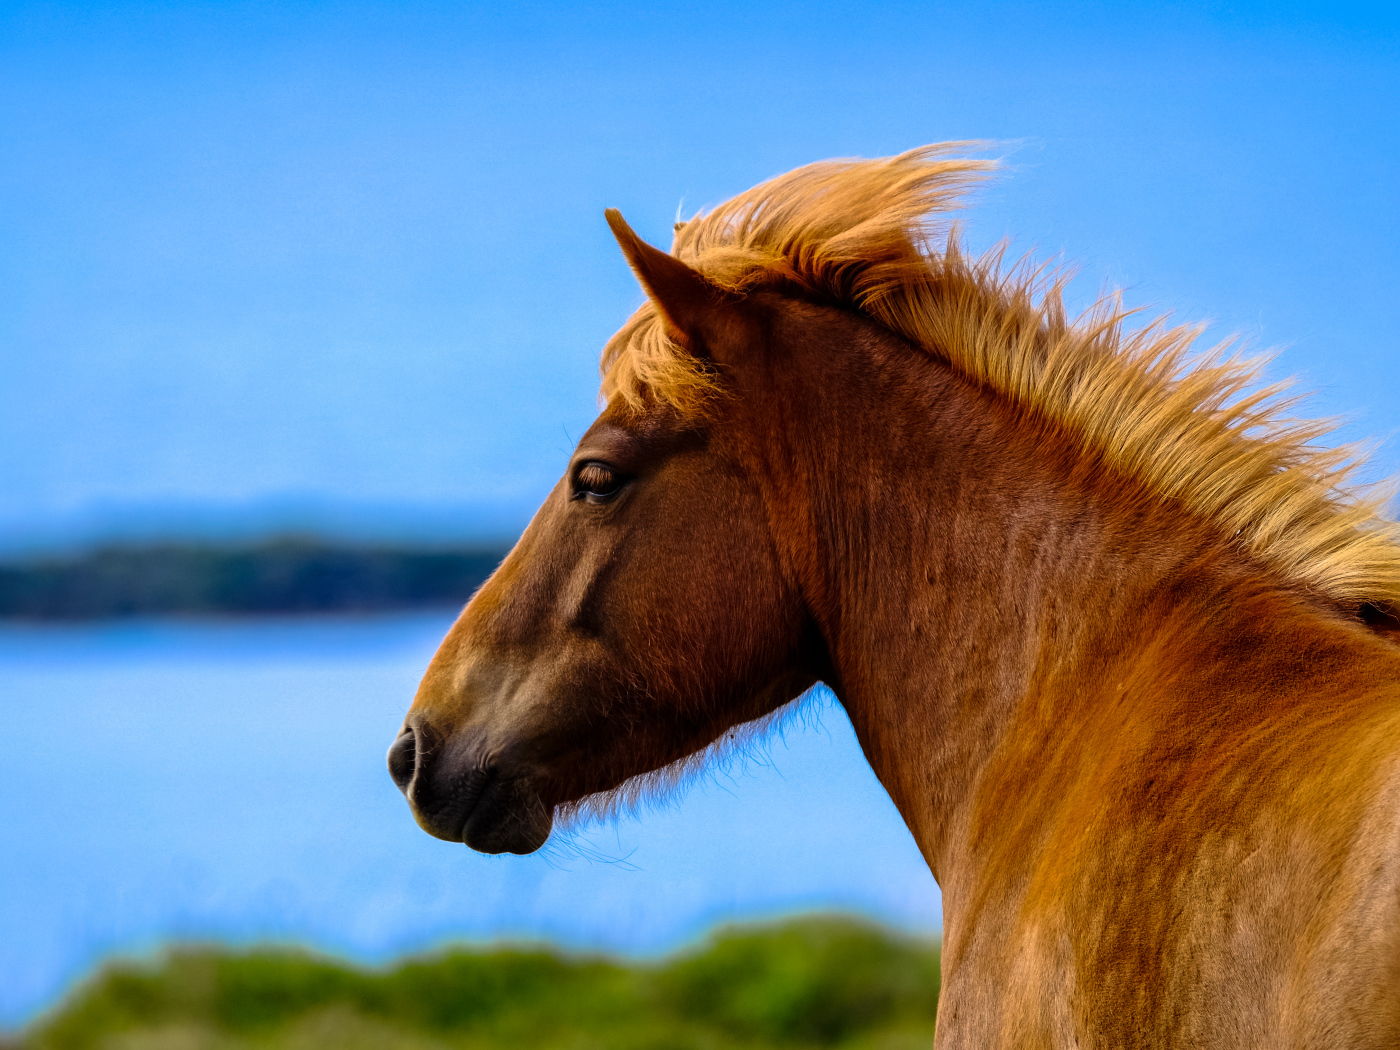 Голова лошади на фоне голубого неба крупным планом